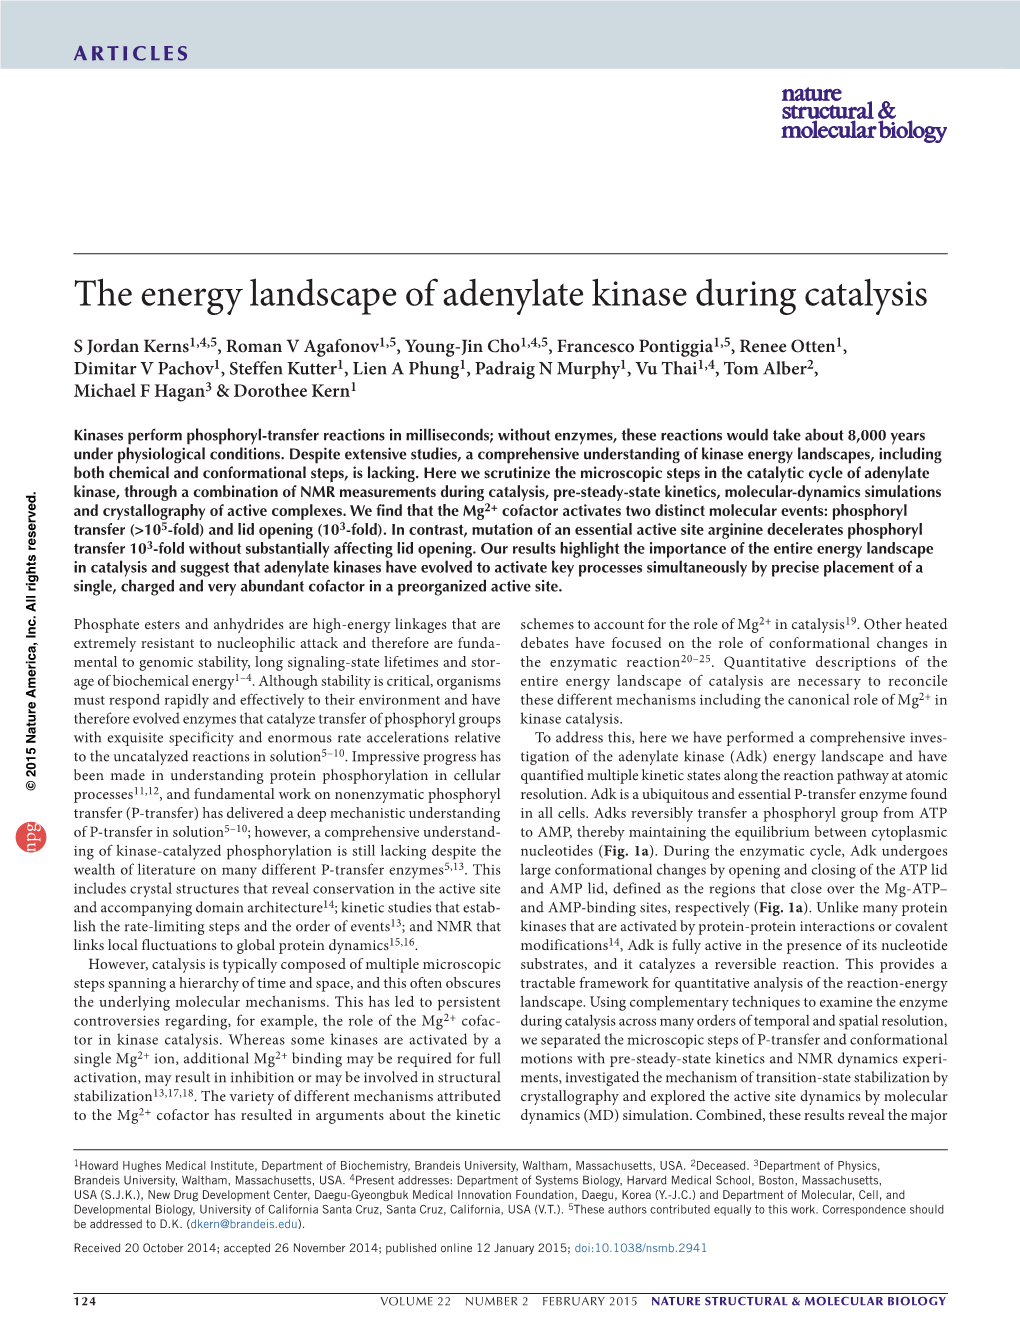 The Energy Landscape of Adenylate Kinase During Catalysis